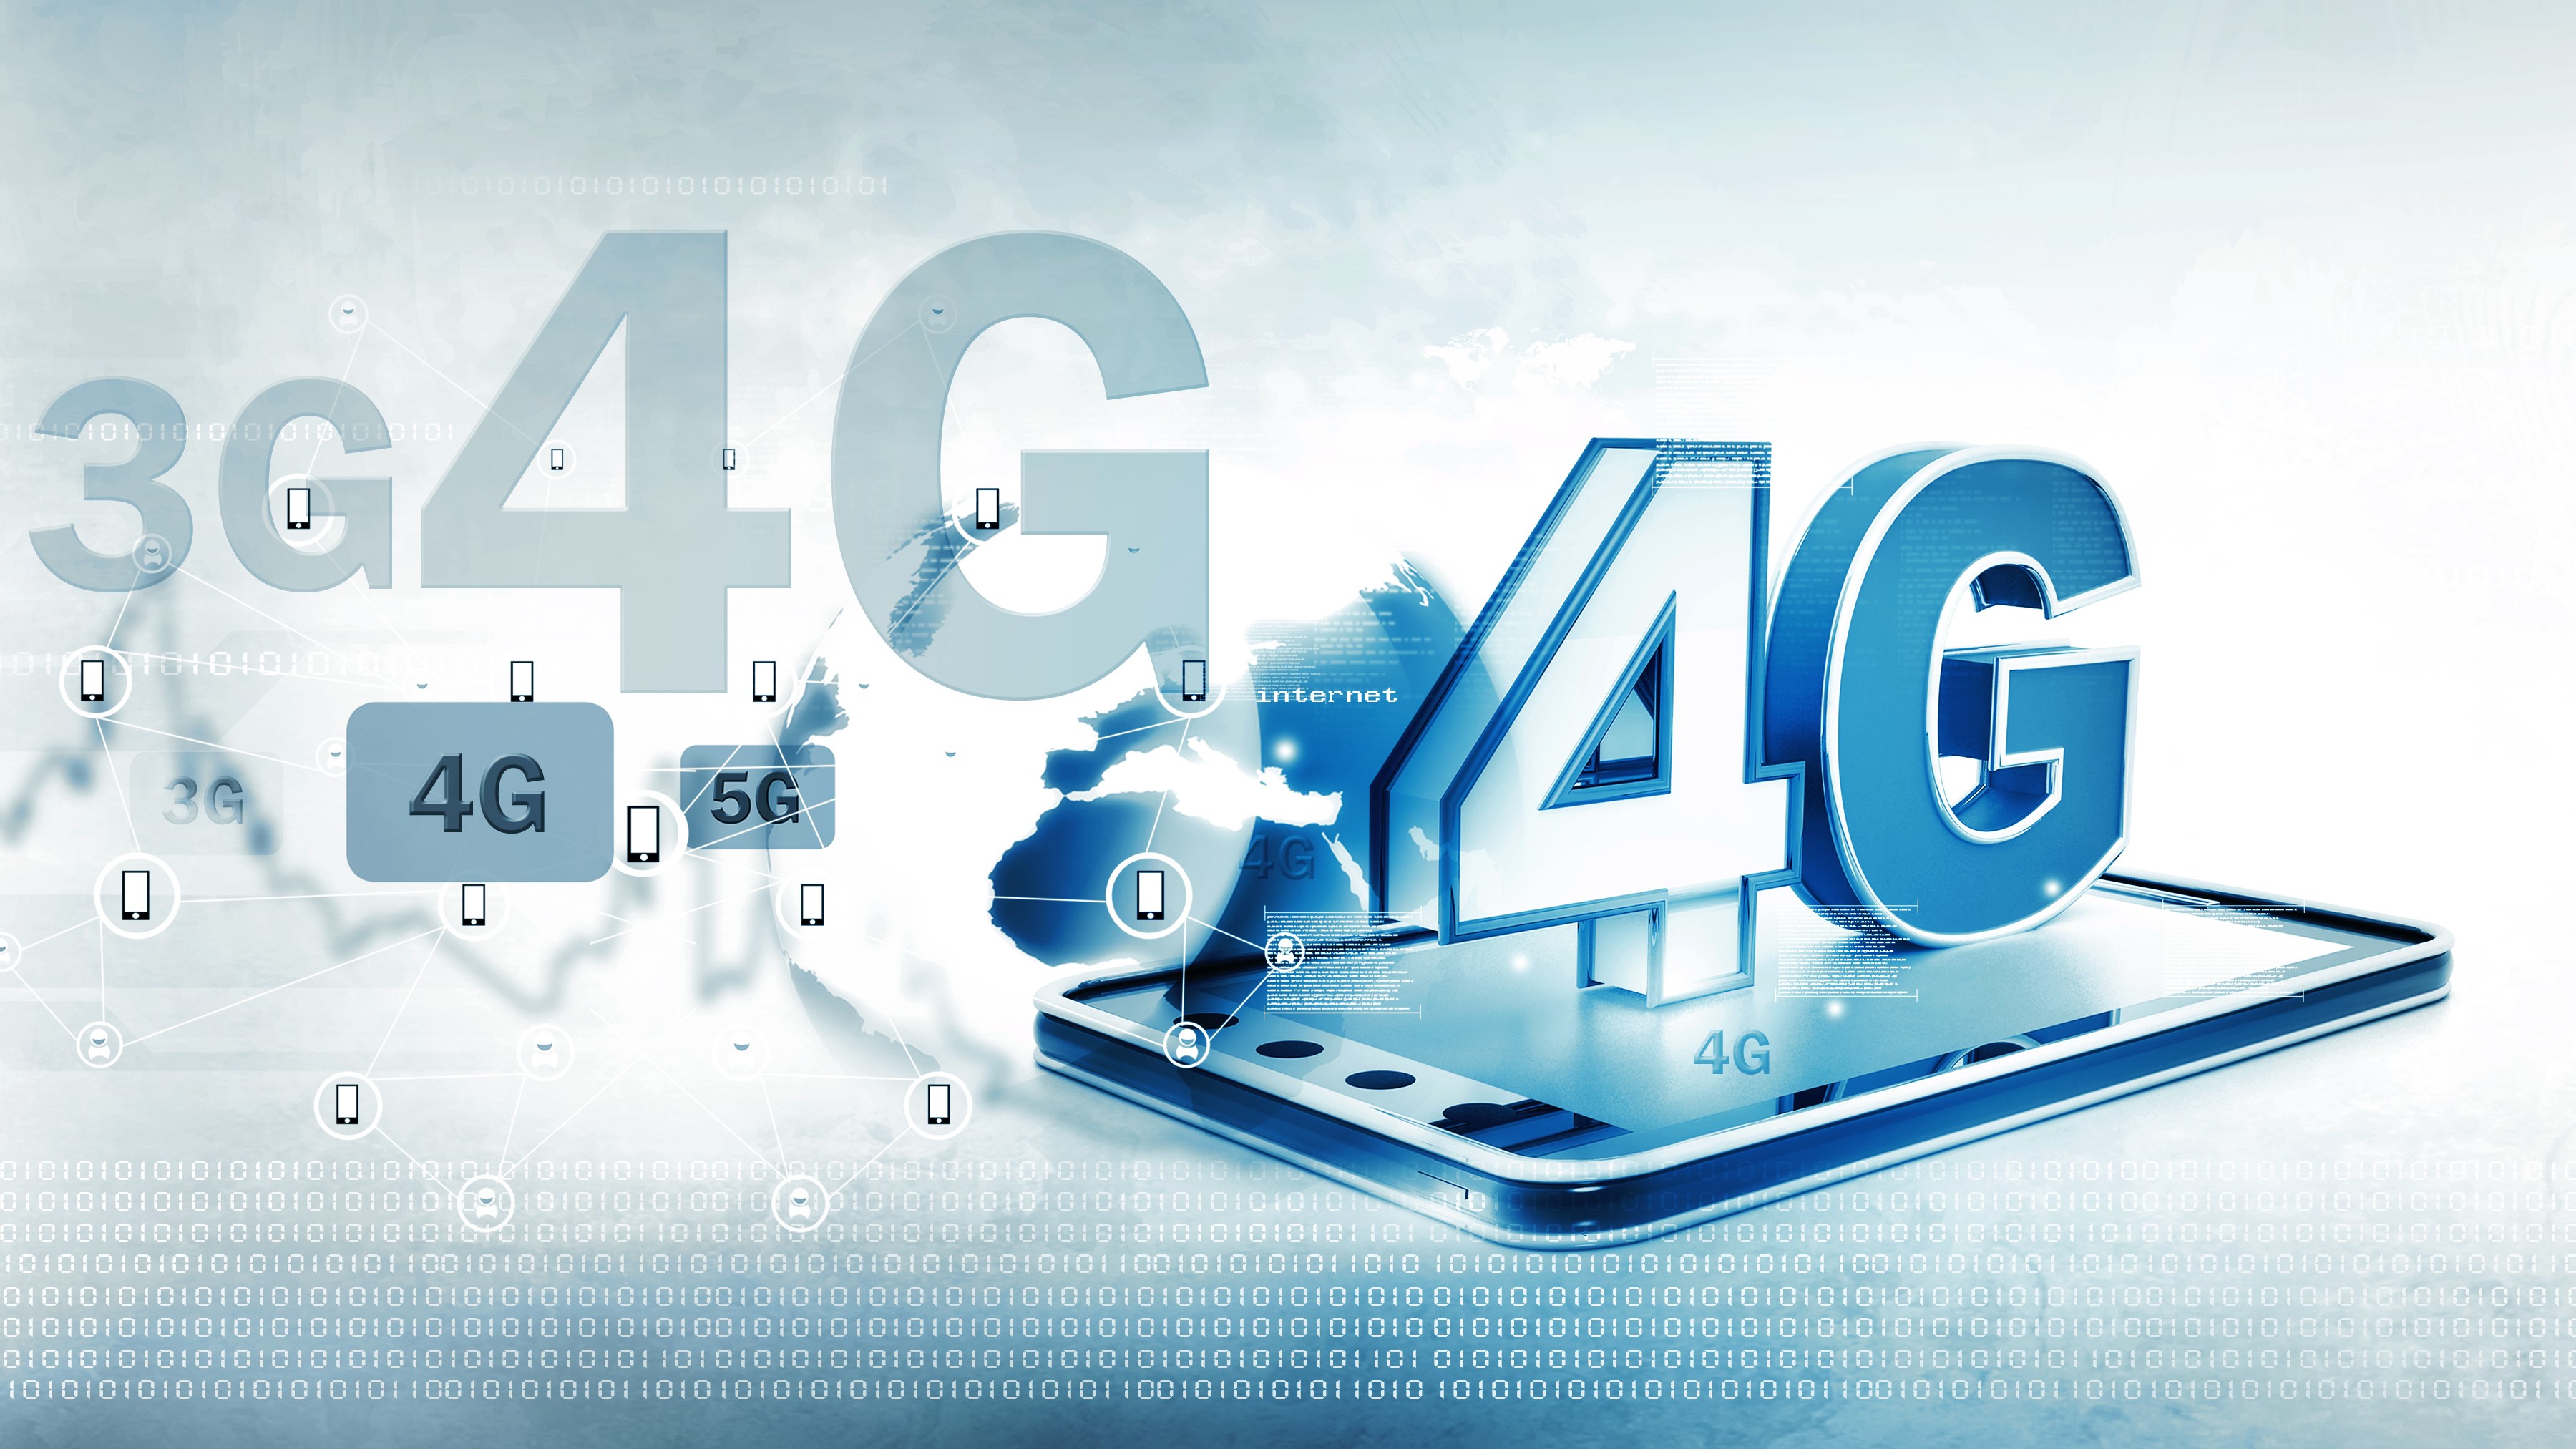 4 internet 4. 4g интернет. Интернет 4g LTE. Мобильный интернет 4g. Сеть 4g.